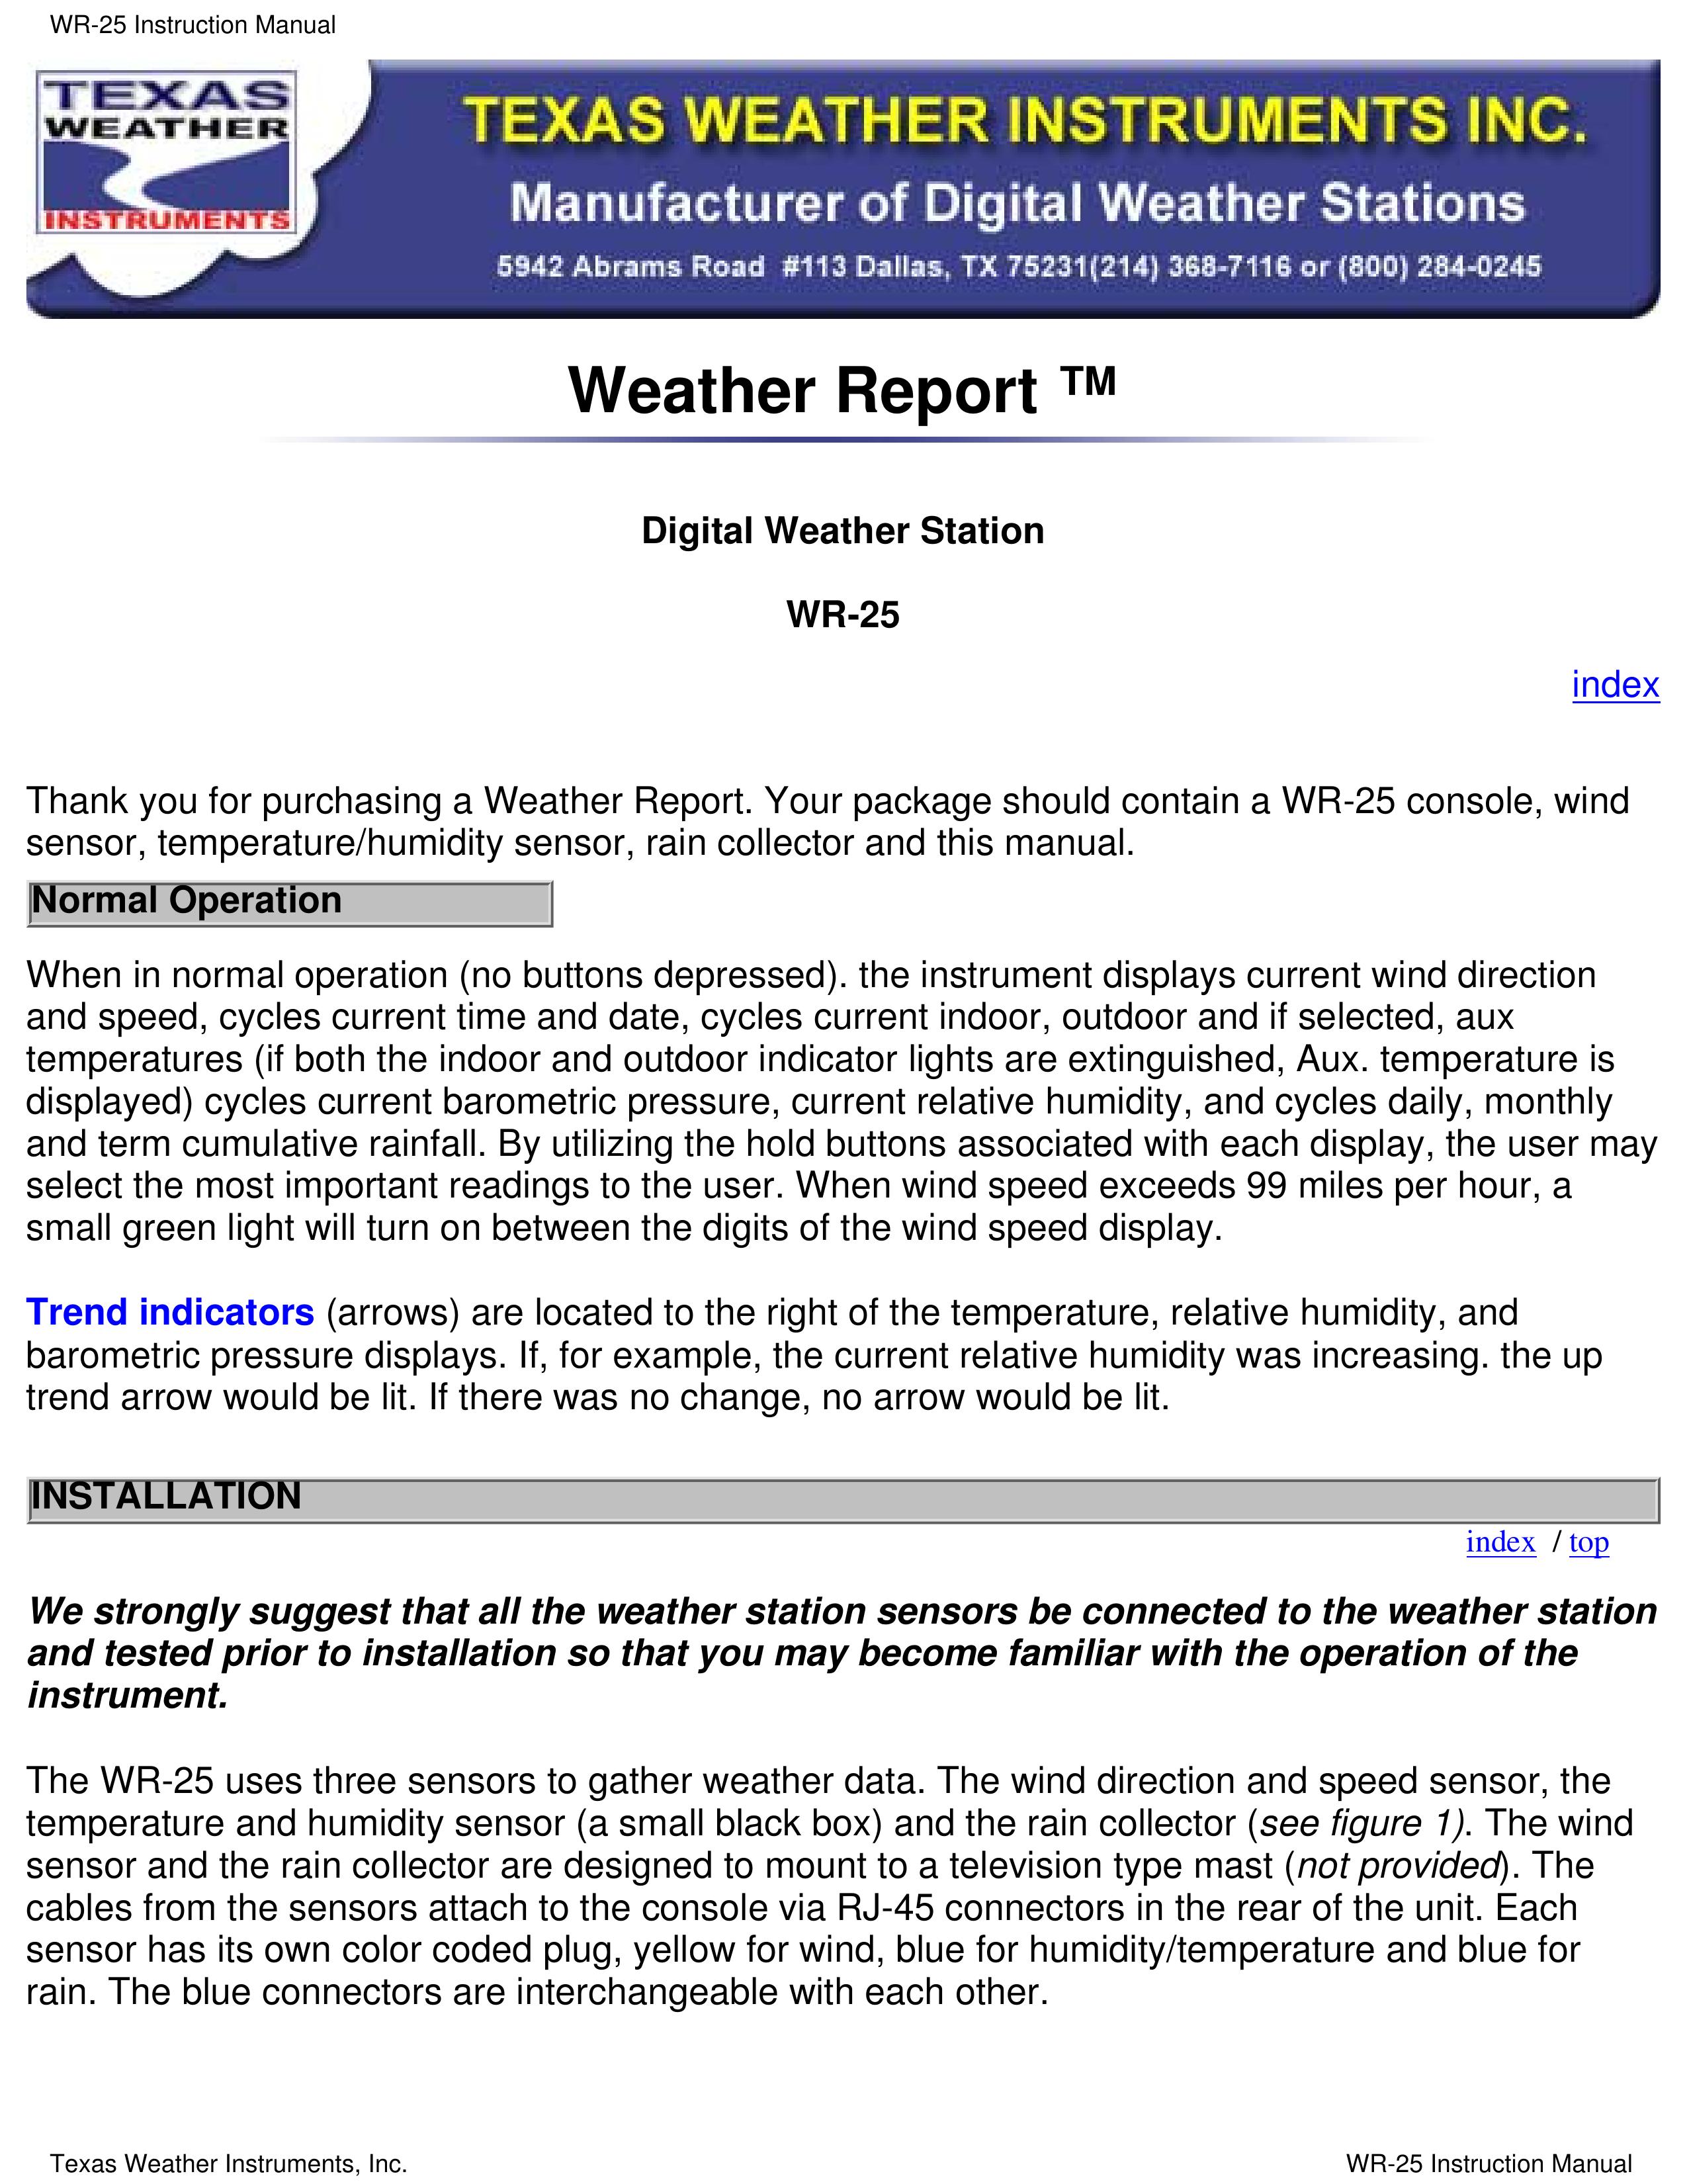 Texas Instruments WR-25 Weather Radio User Manual